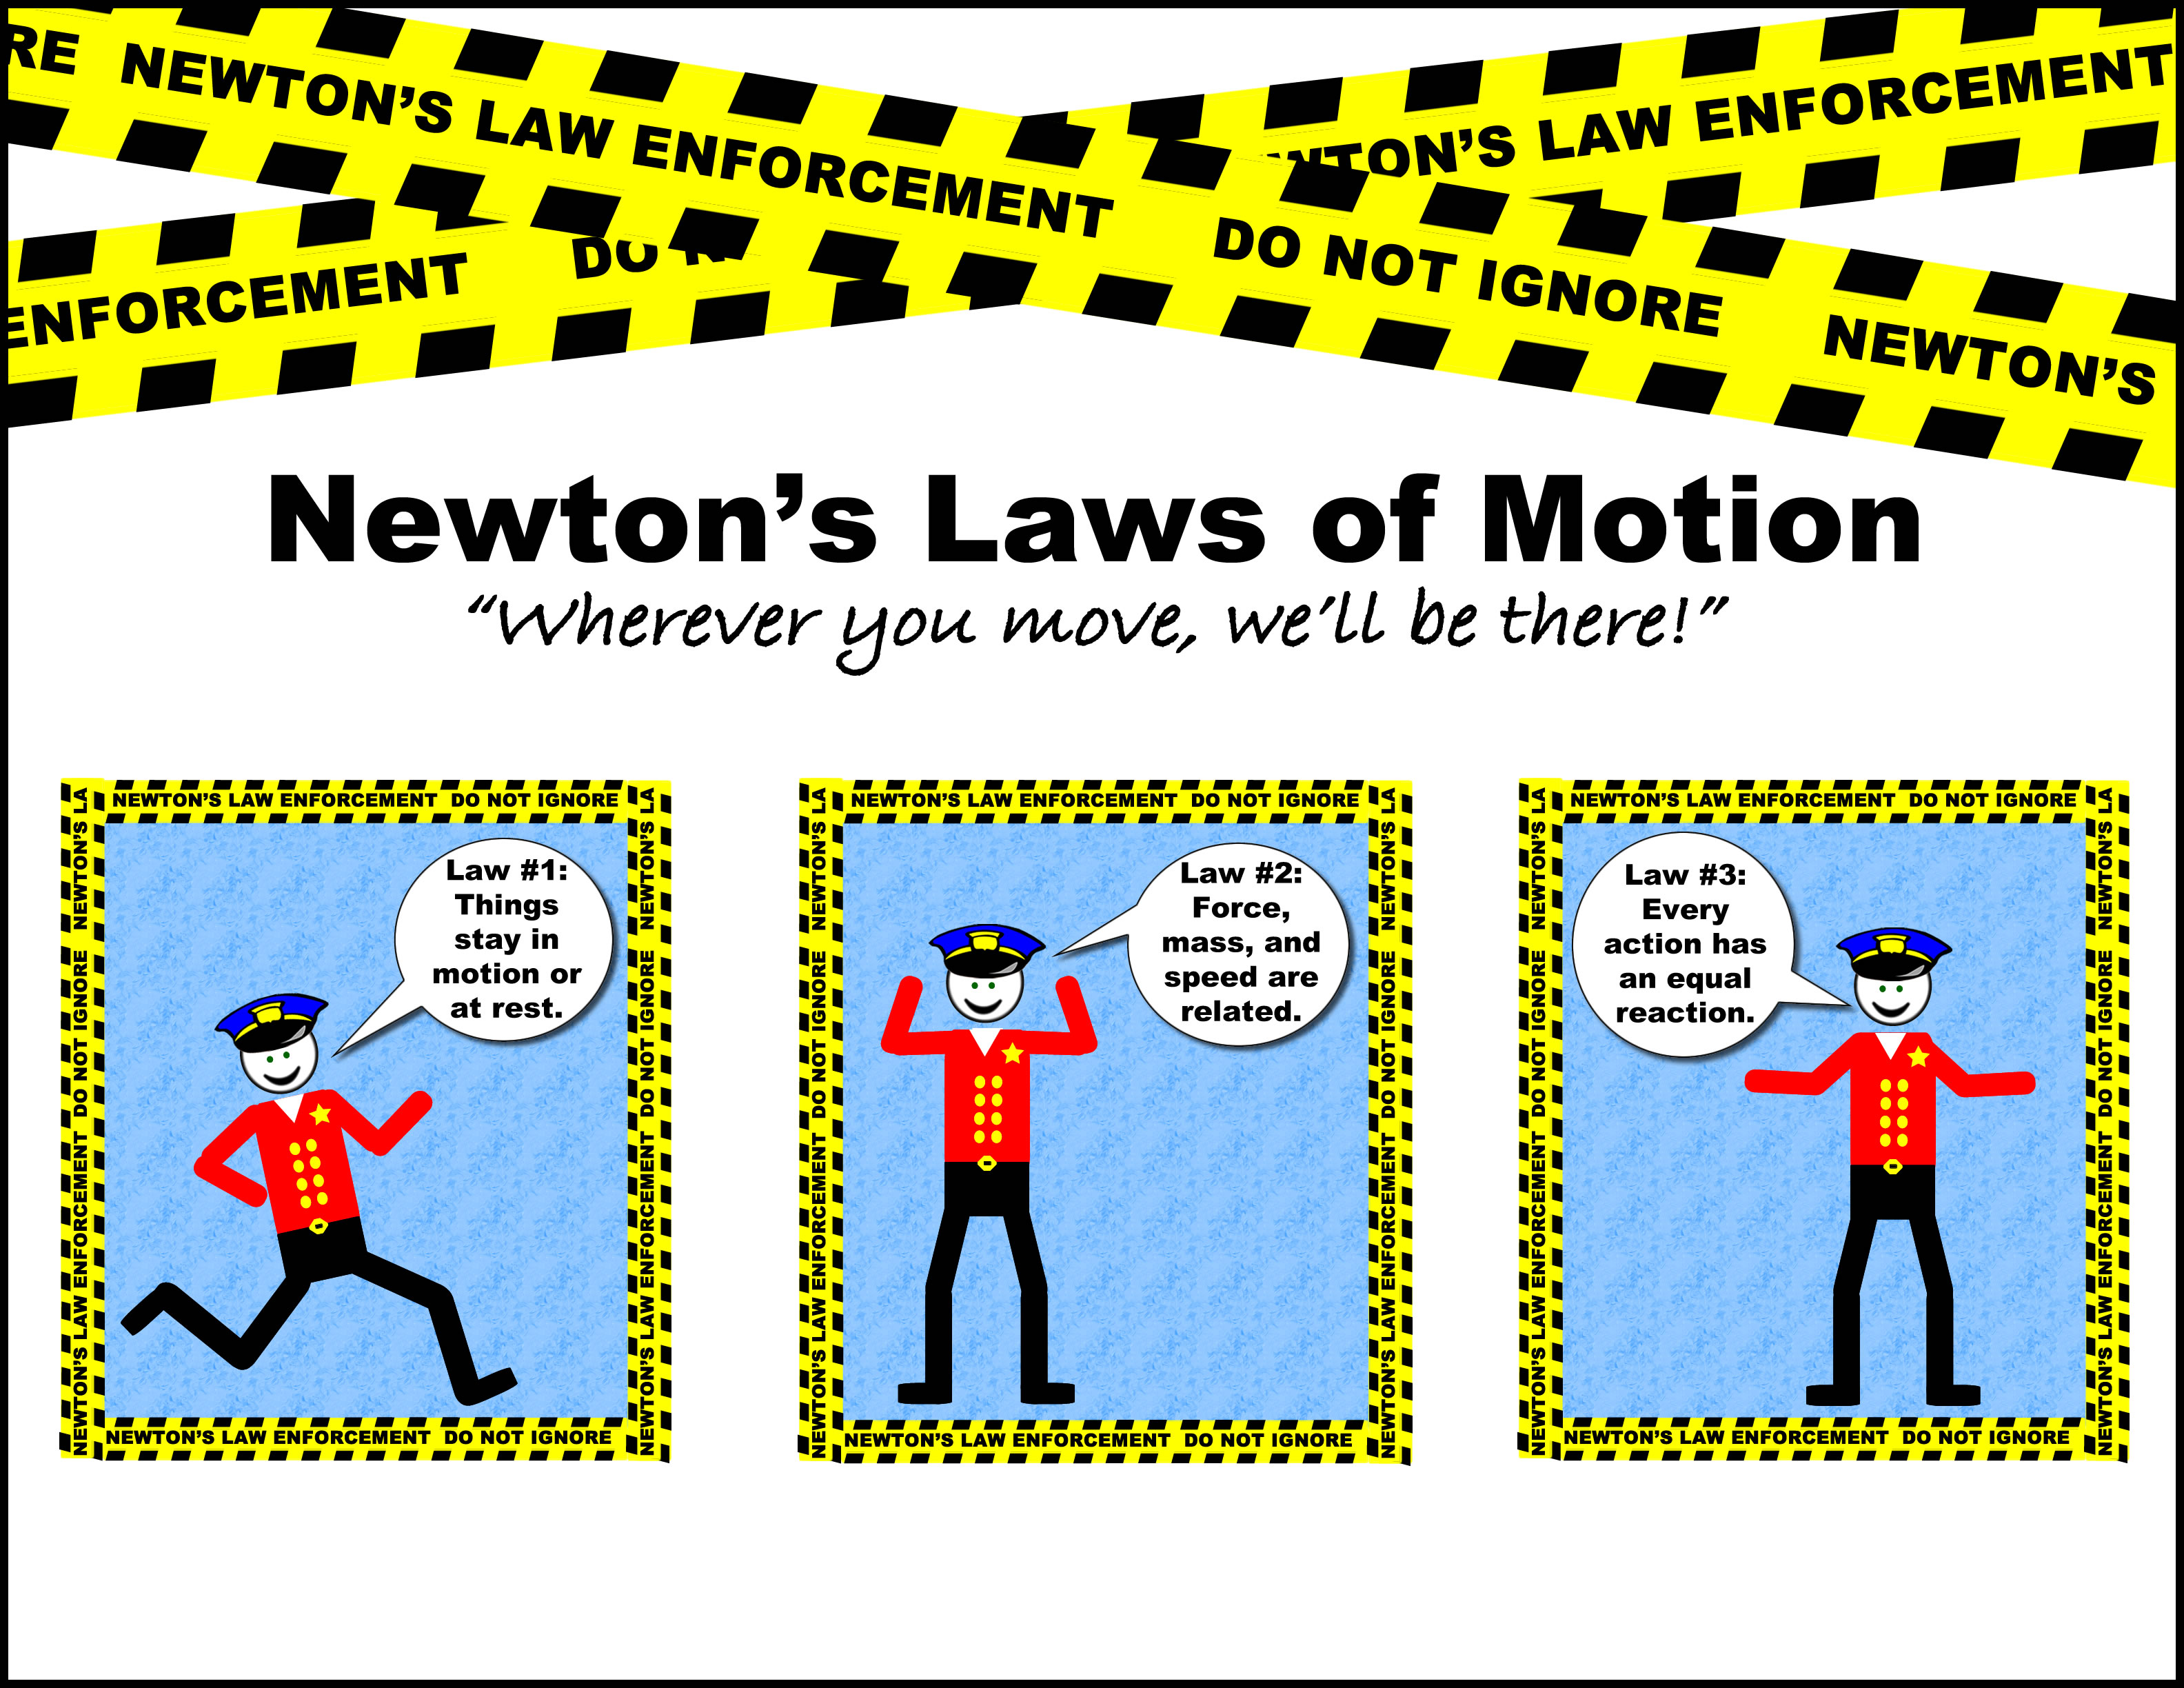 Newton's laws